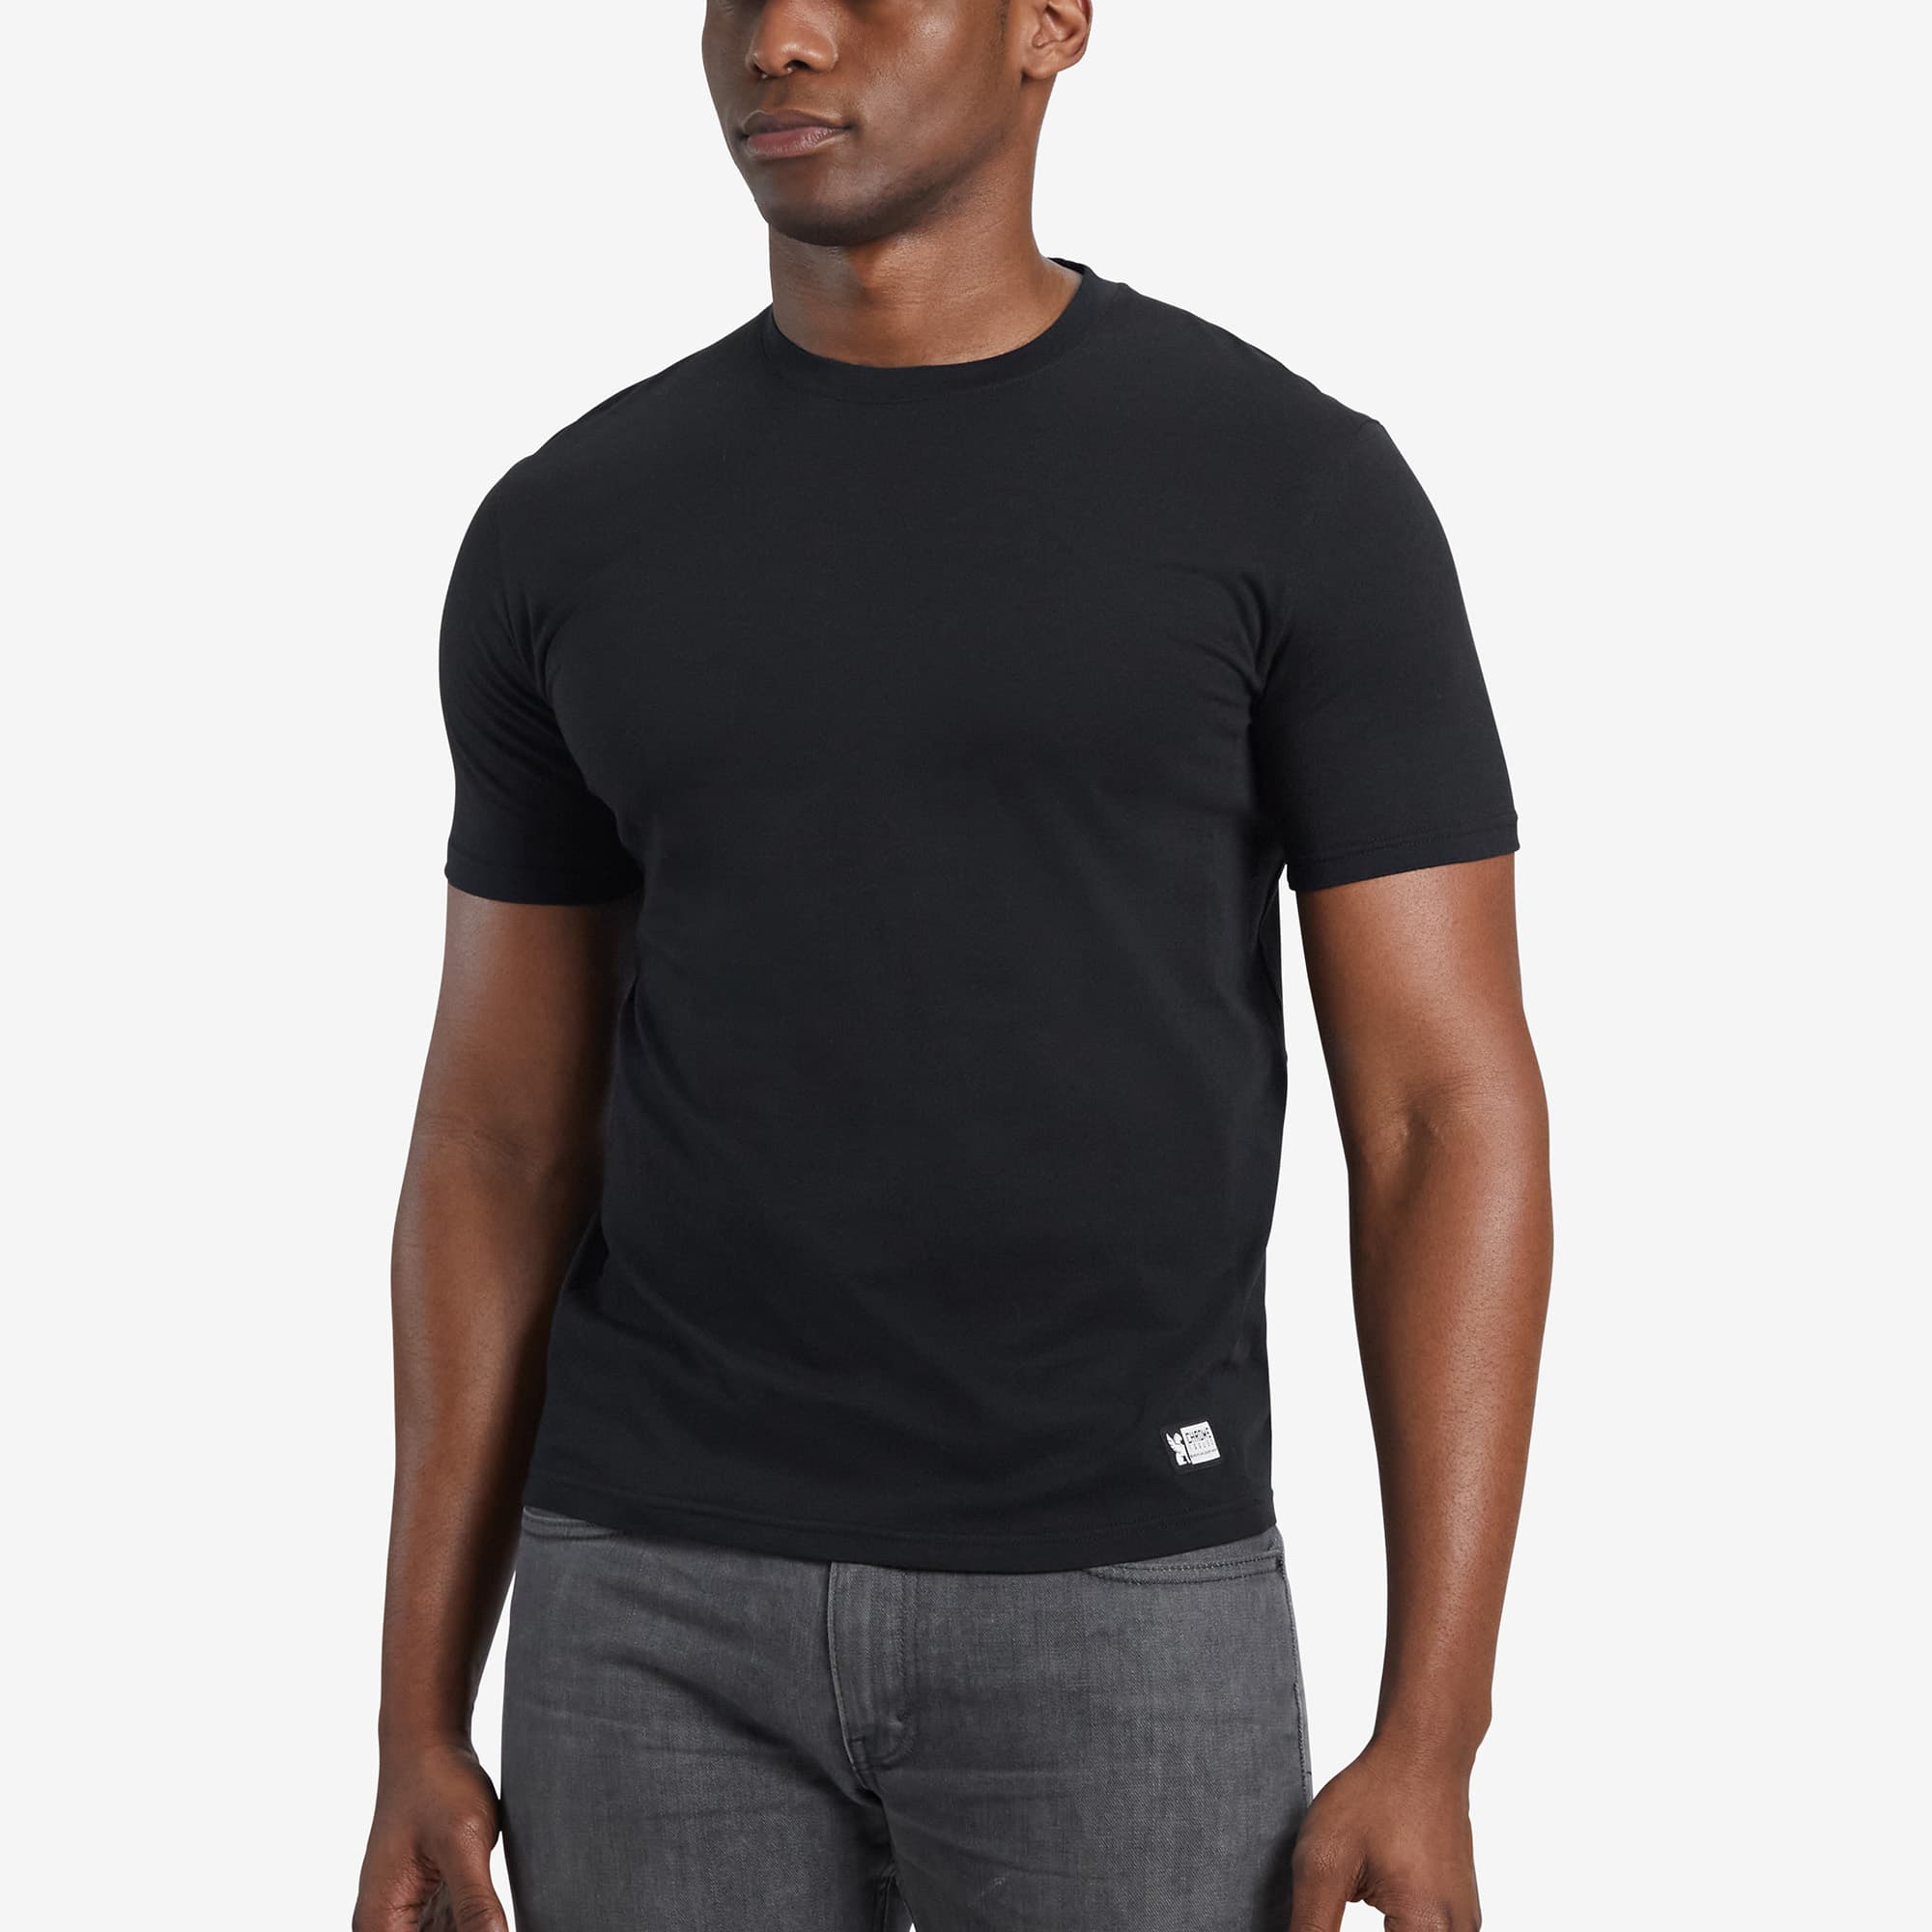 Men's Chrome basics T-shirt short sleeve in black worn by a man #color_black